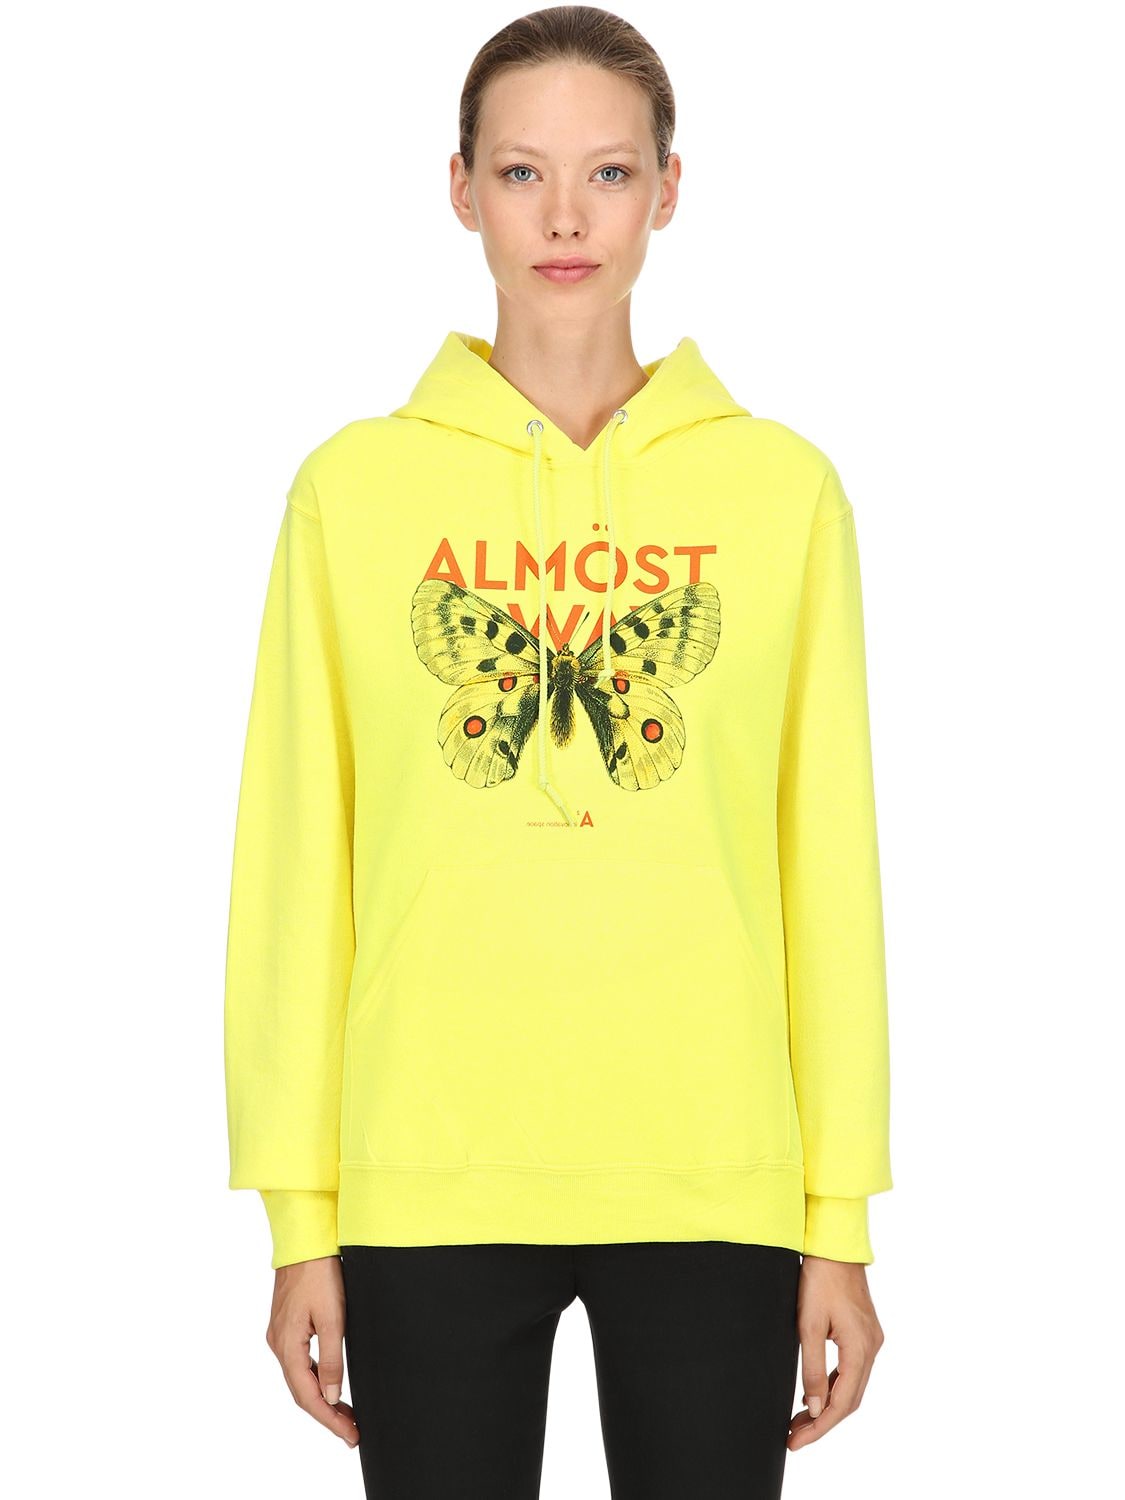 Almost Always Monarch Butterfly Hooded Sweatshirt In Yellow